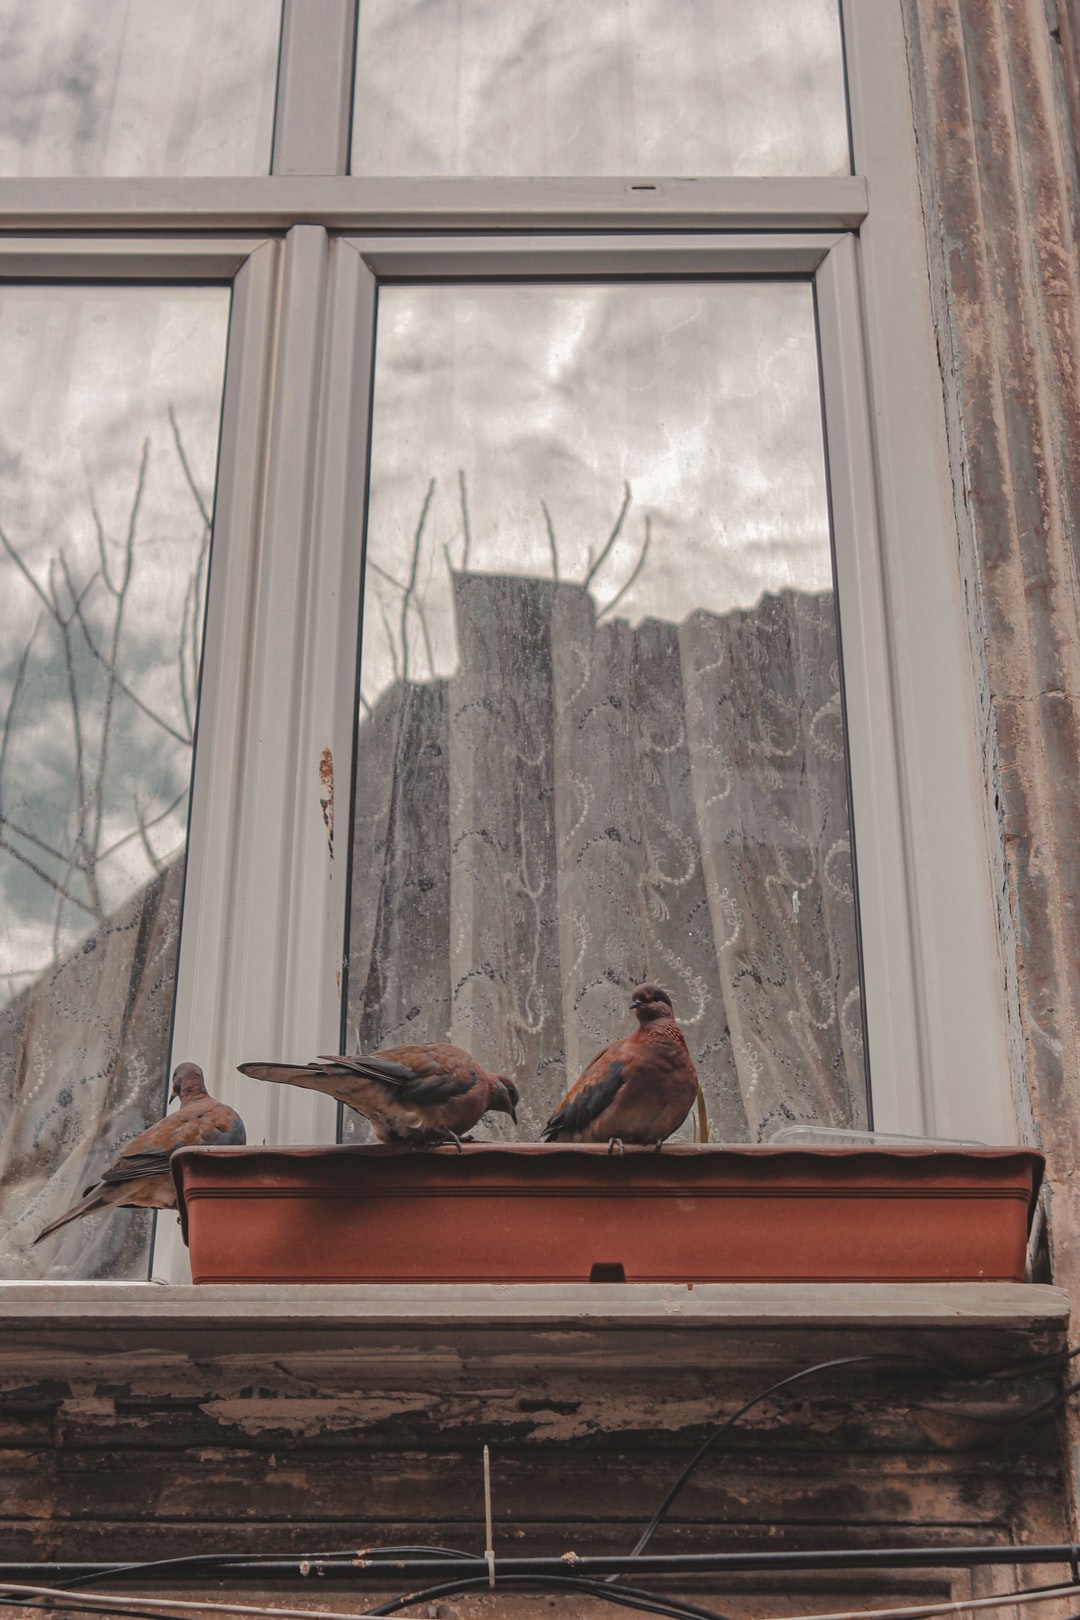 Птица врезалась в окно. Птица ударилась в окно. Птица врезалась в окно примета. Птица врезалась в стеклопакет.